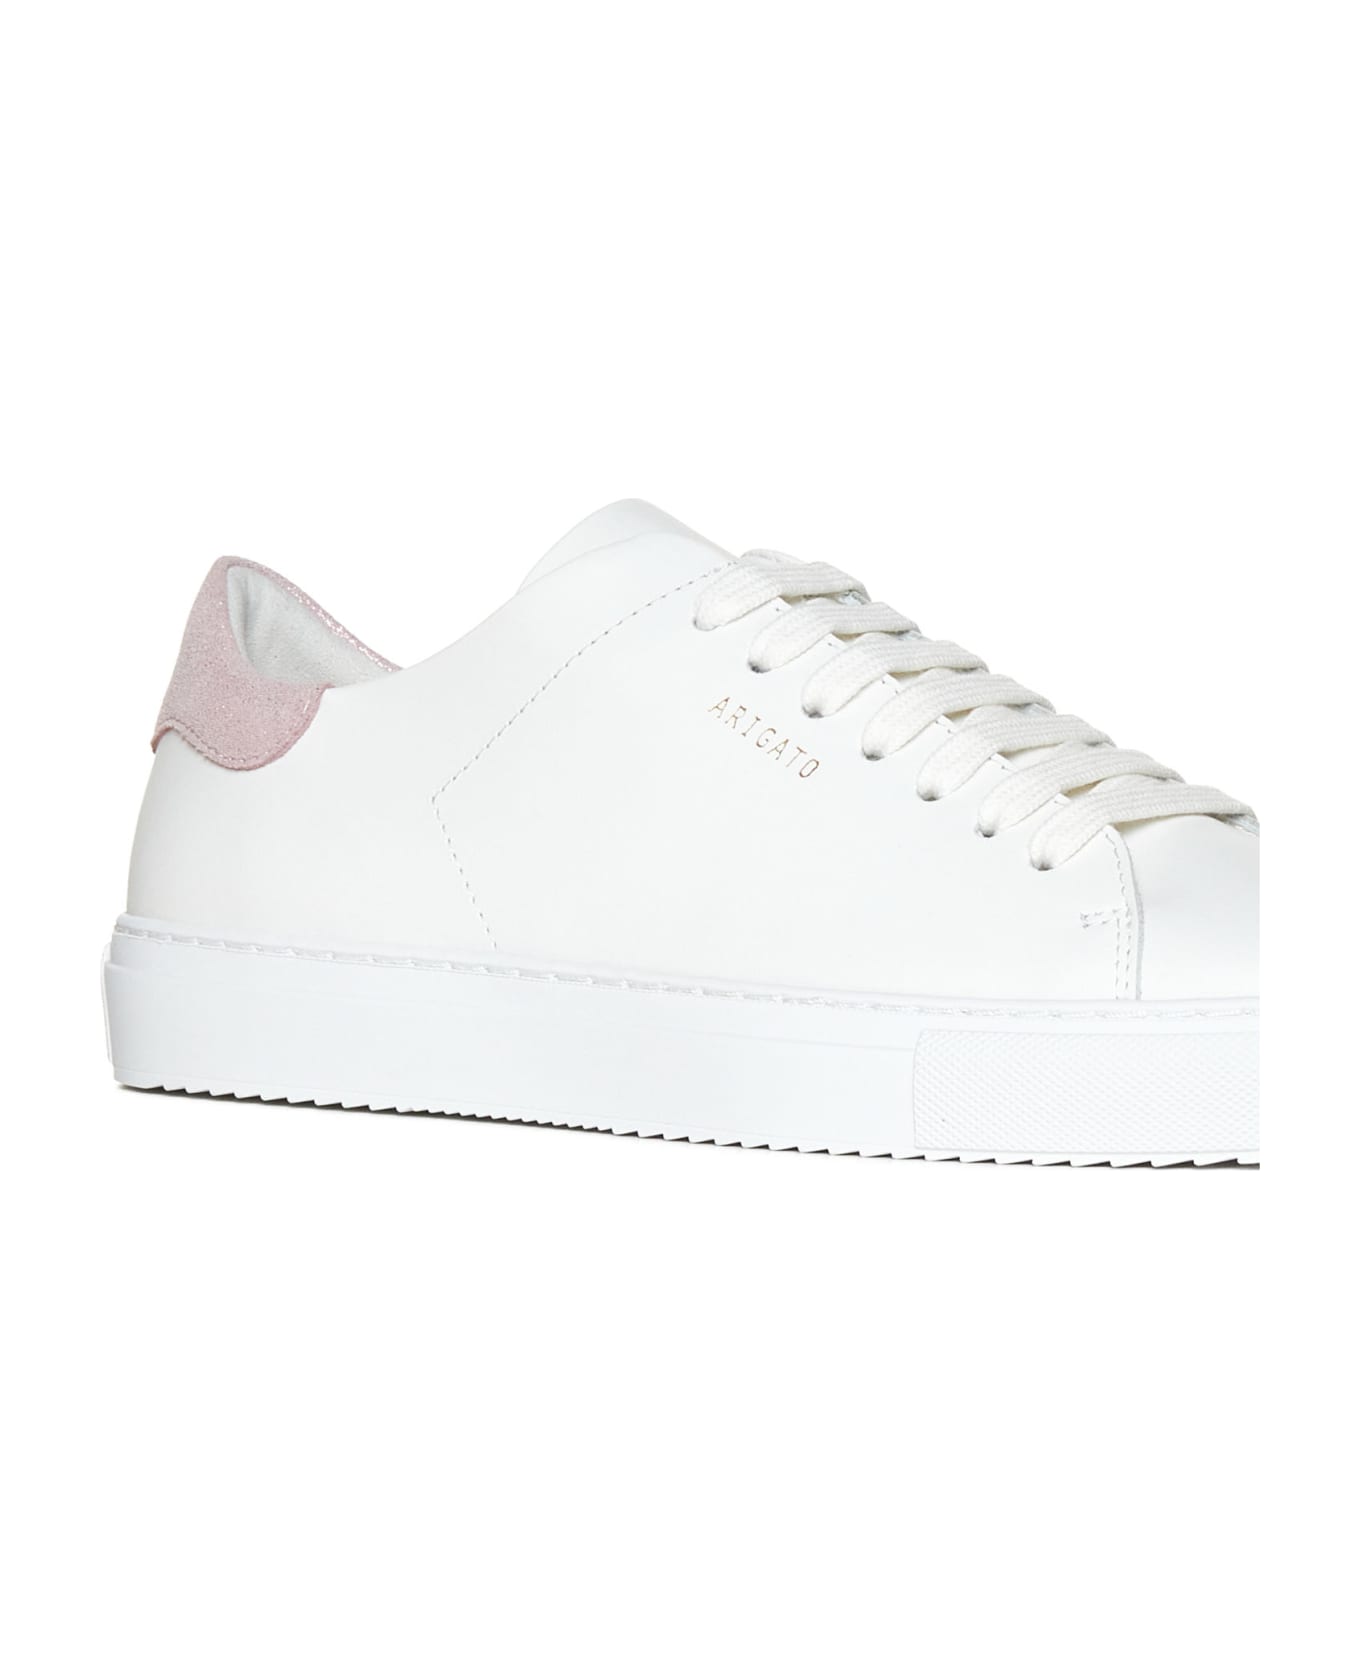 Axel Arigato Sneakers - White/pink